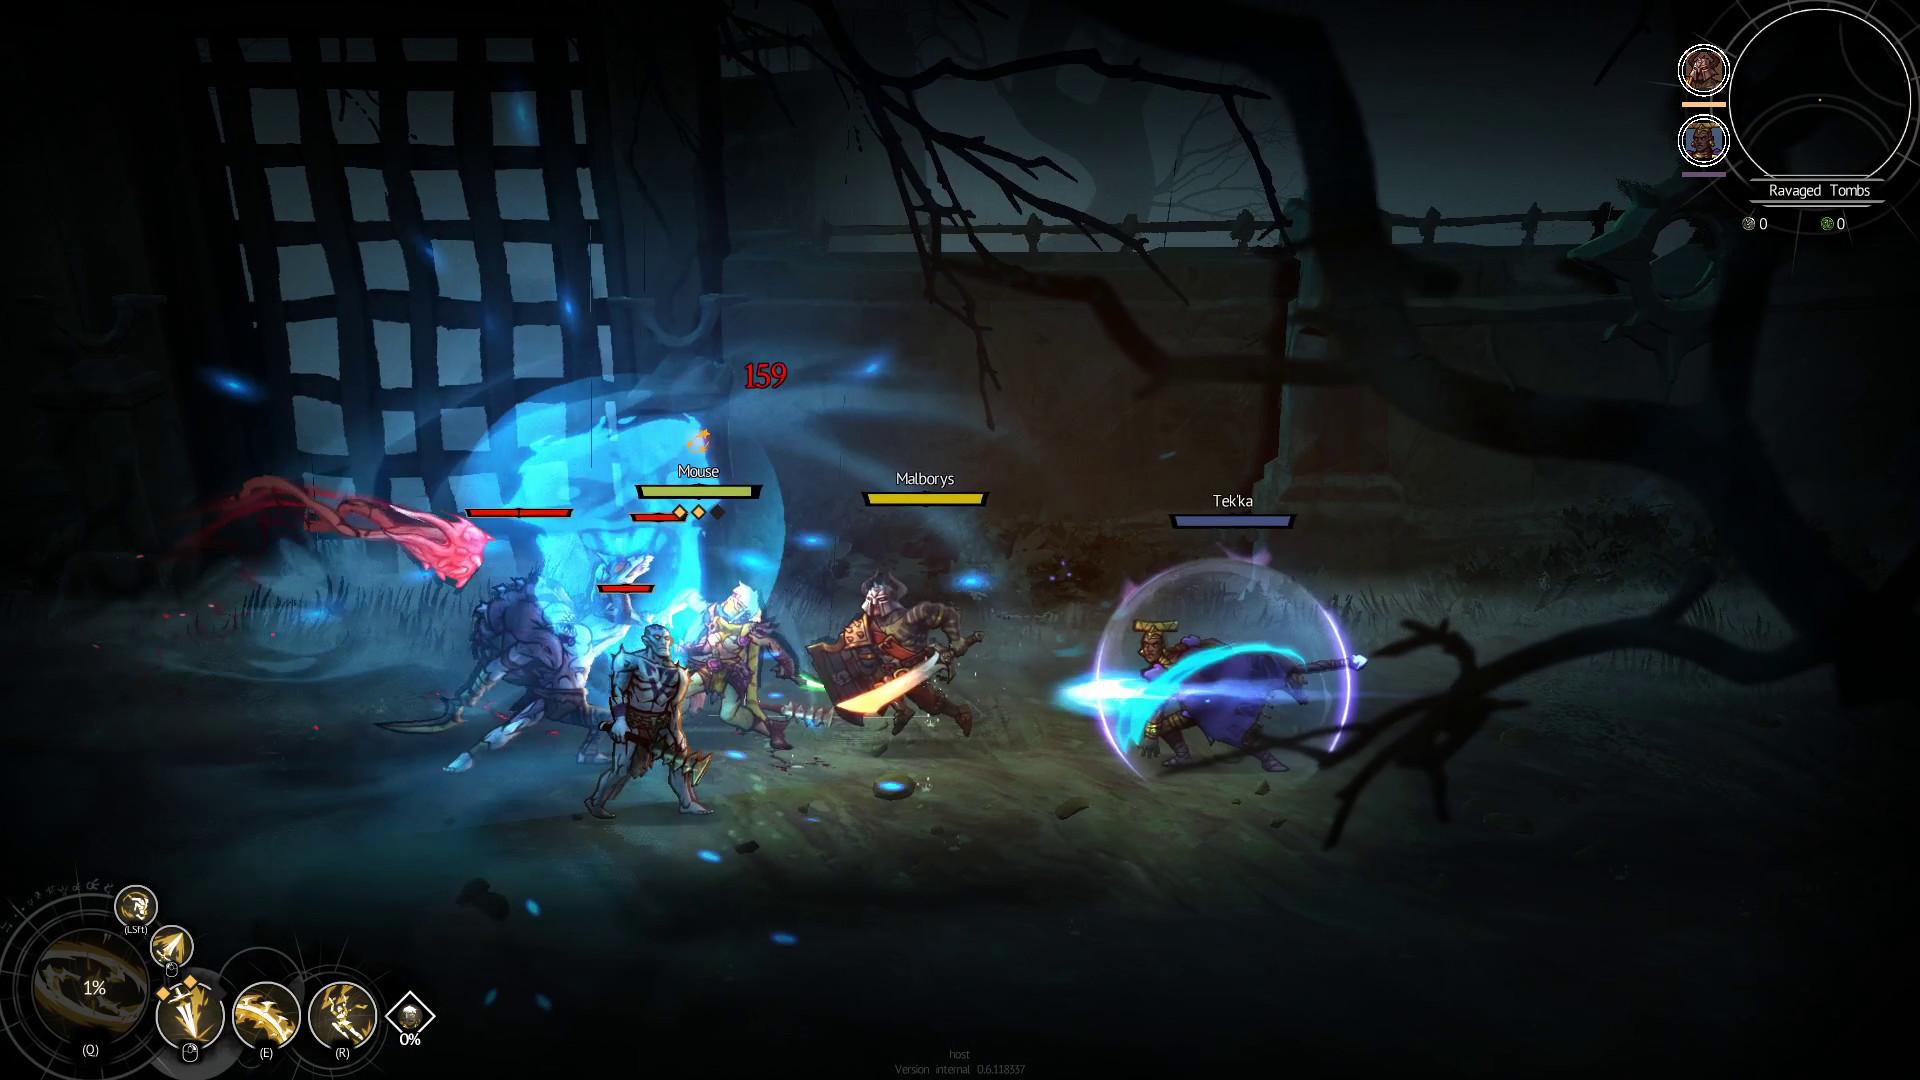 Screenshot №4 from game Blightbound